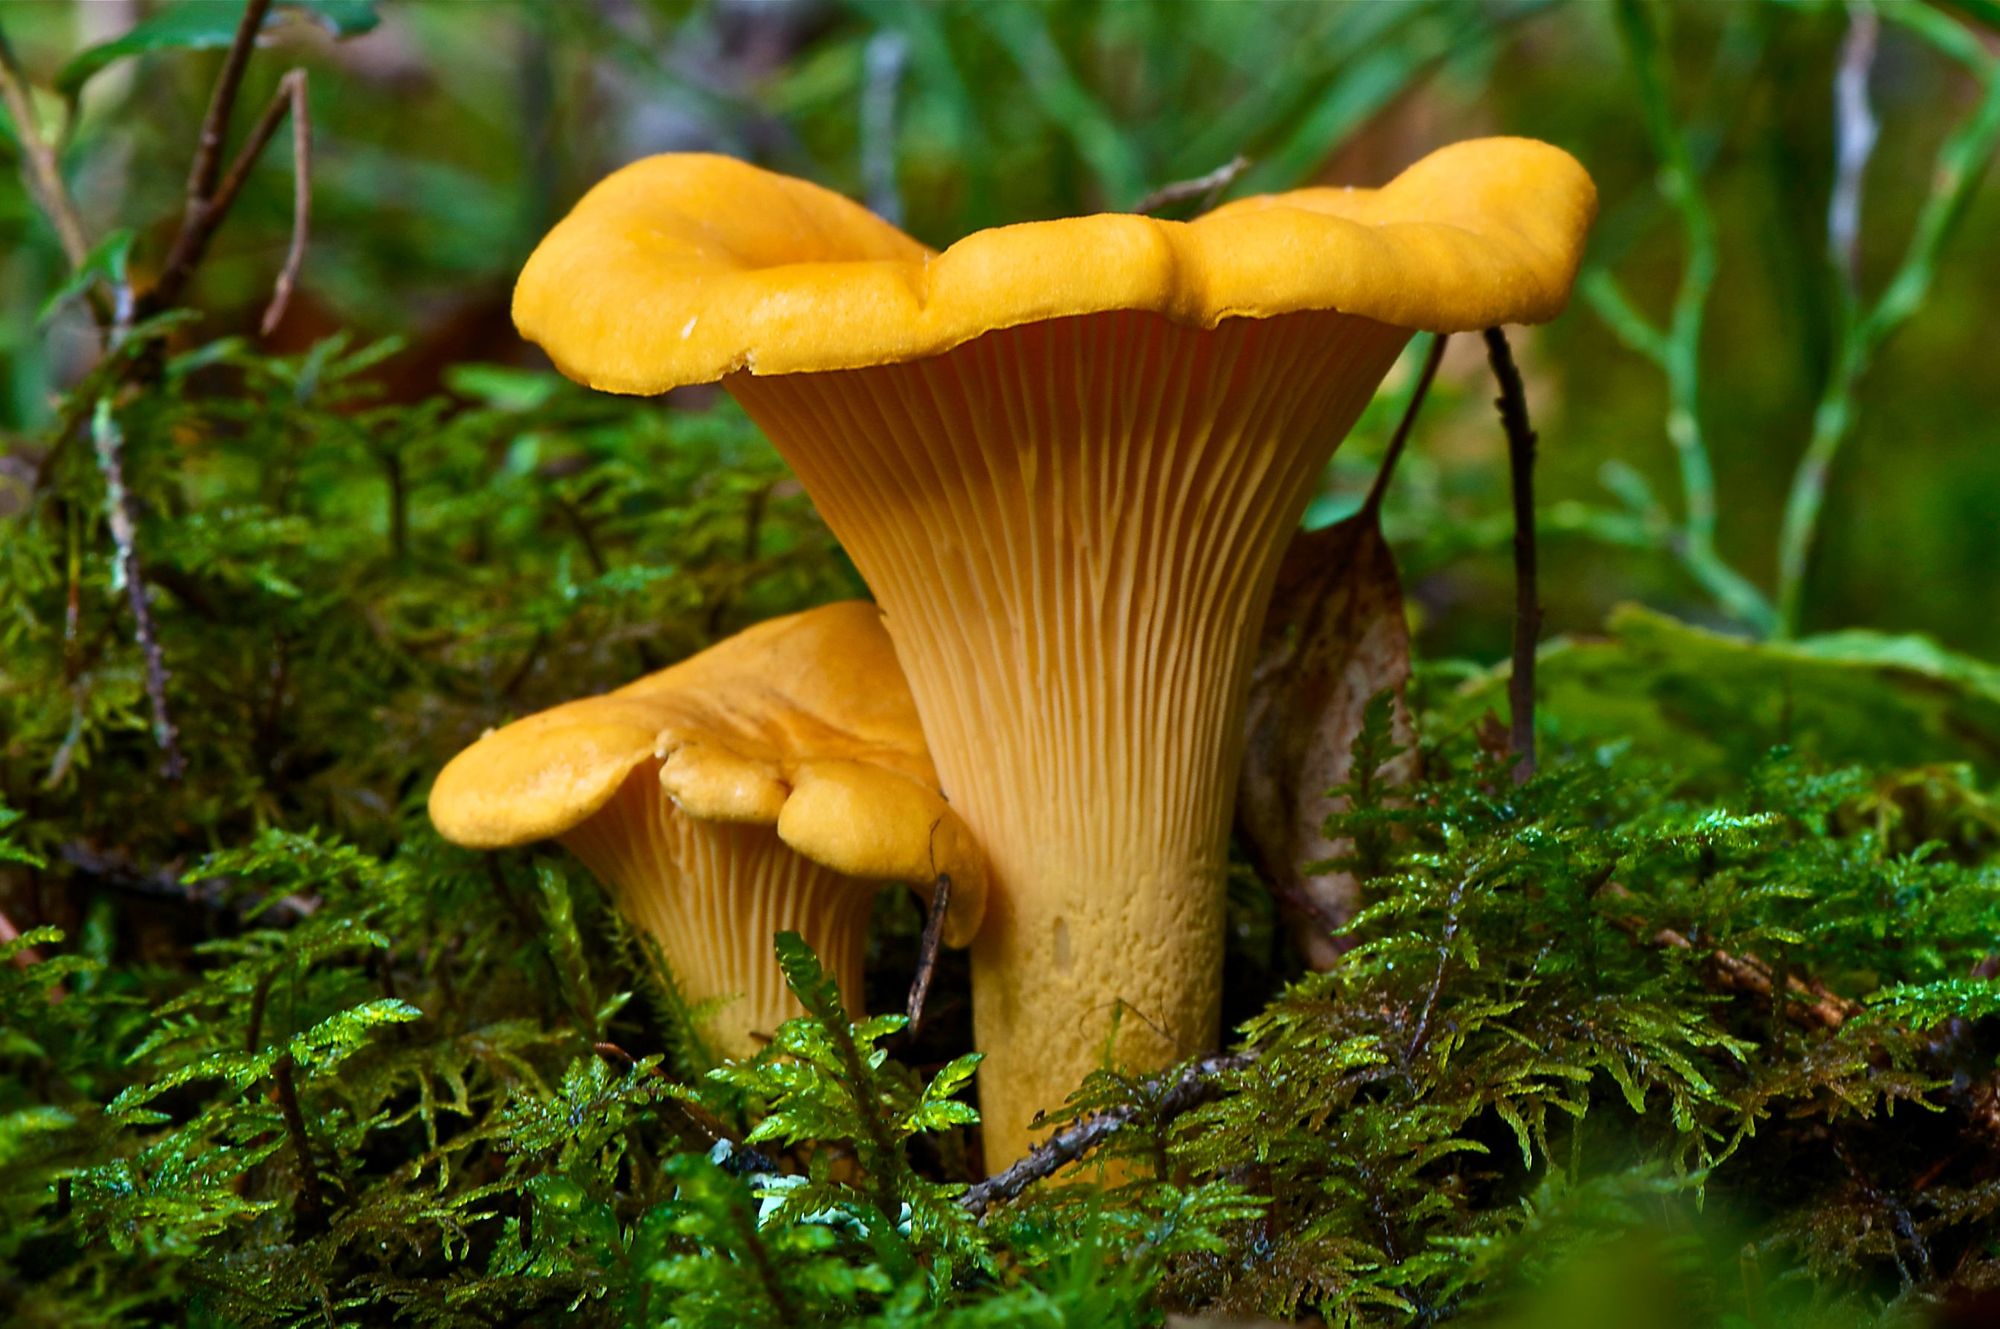 A close up of a chanterelle mushroom